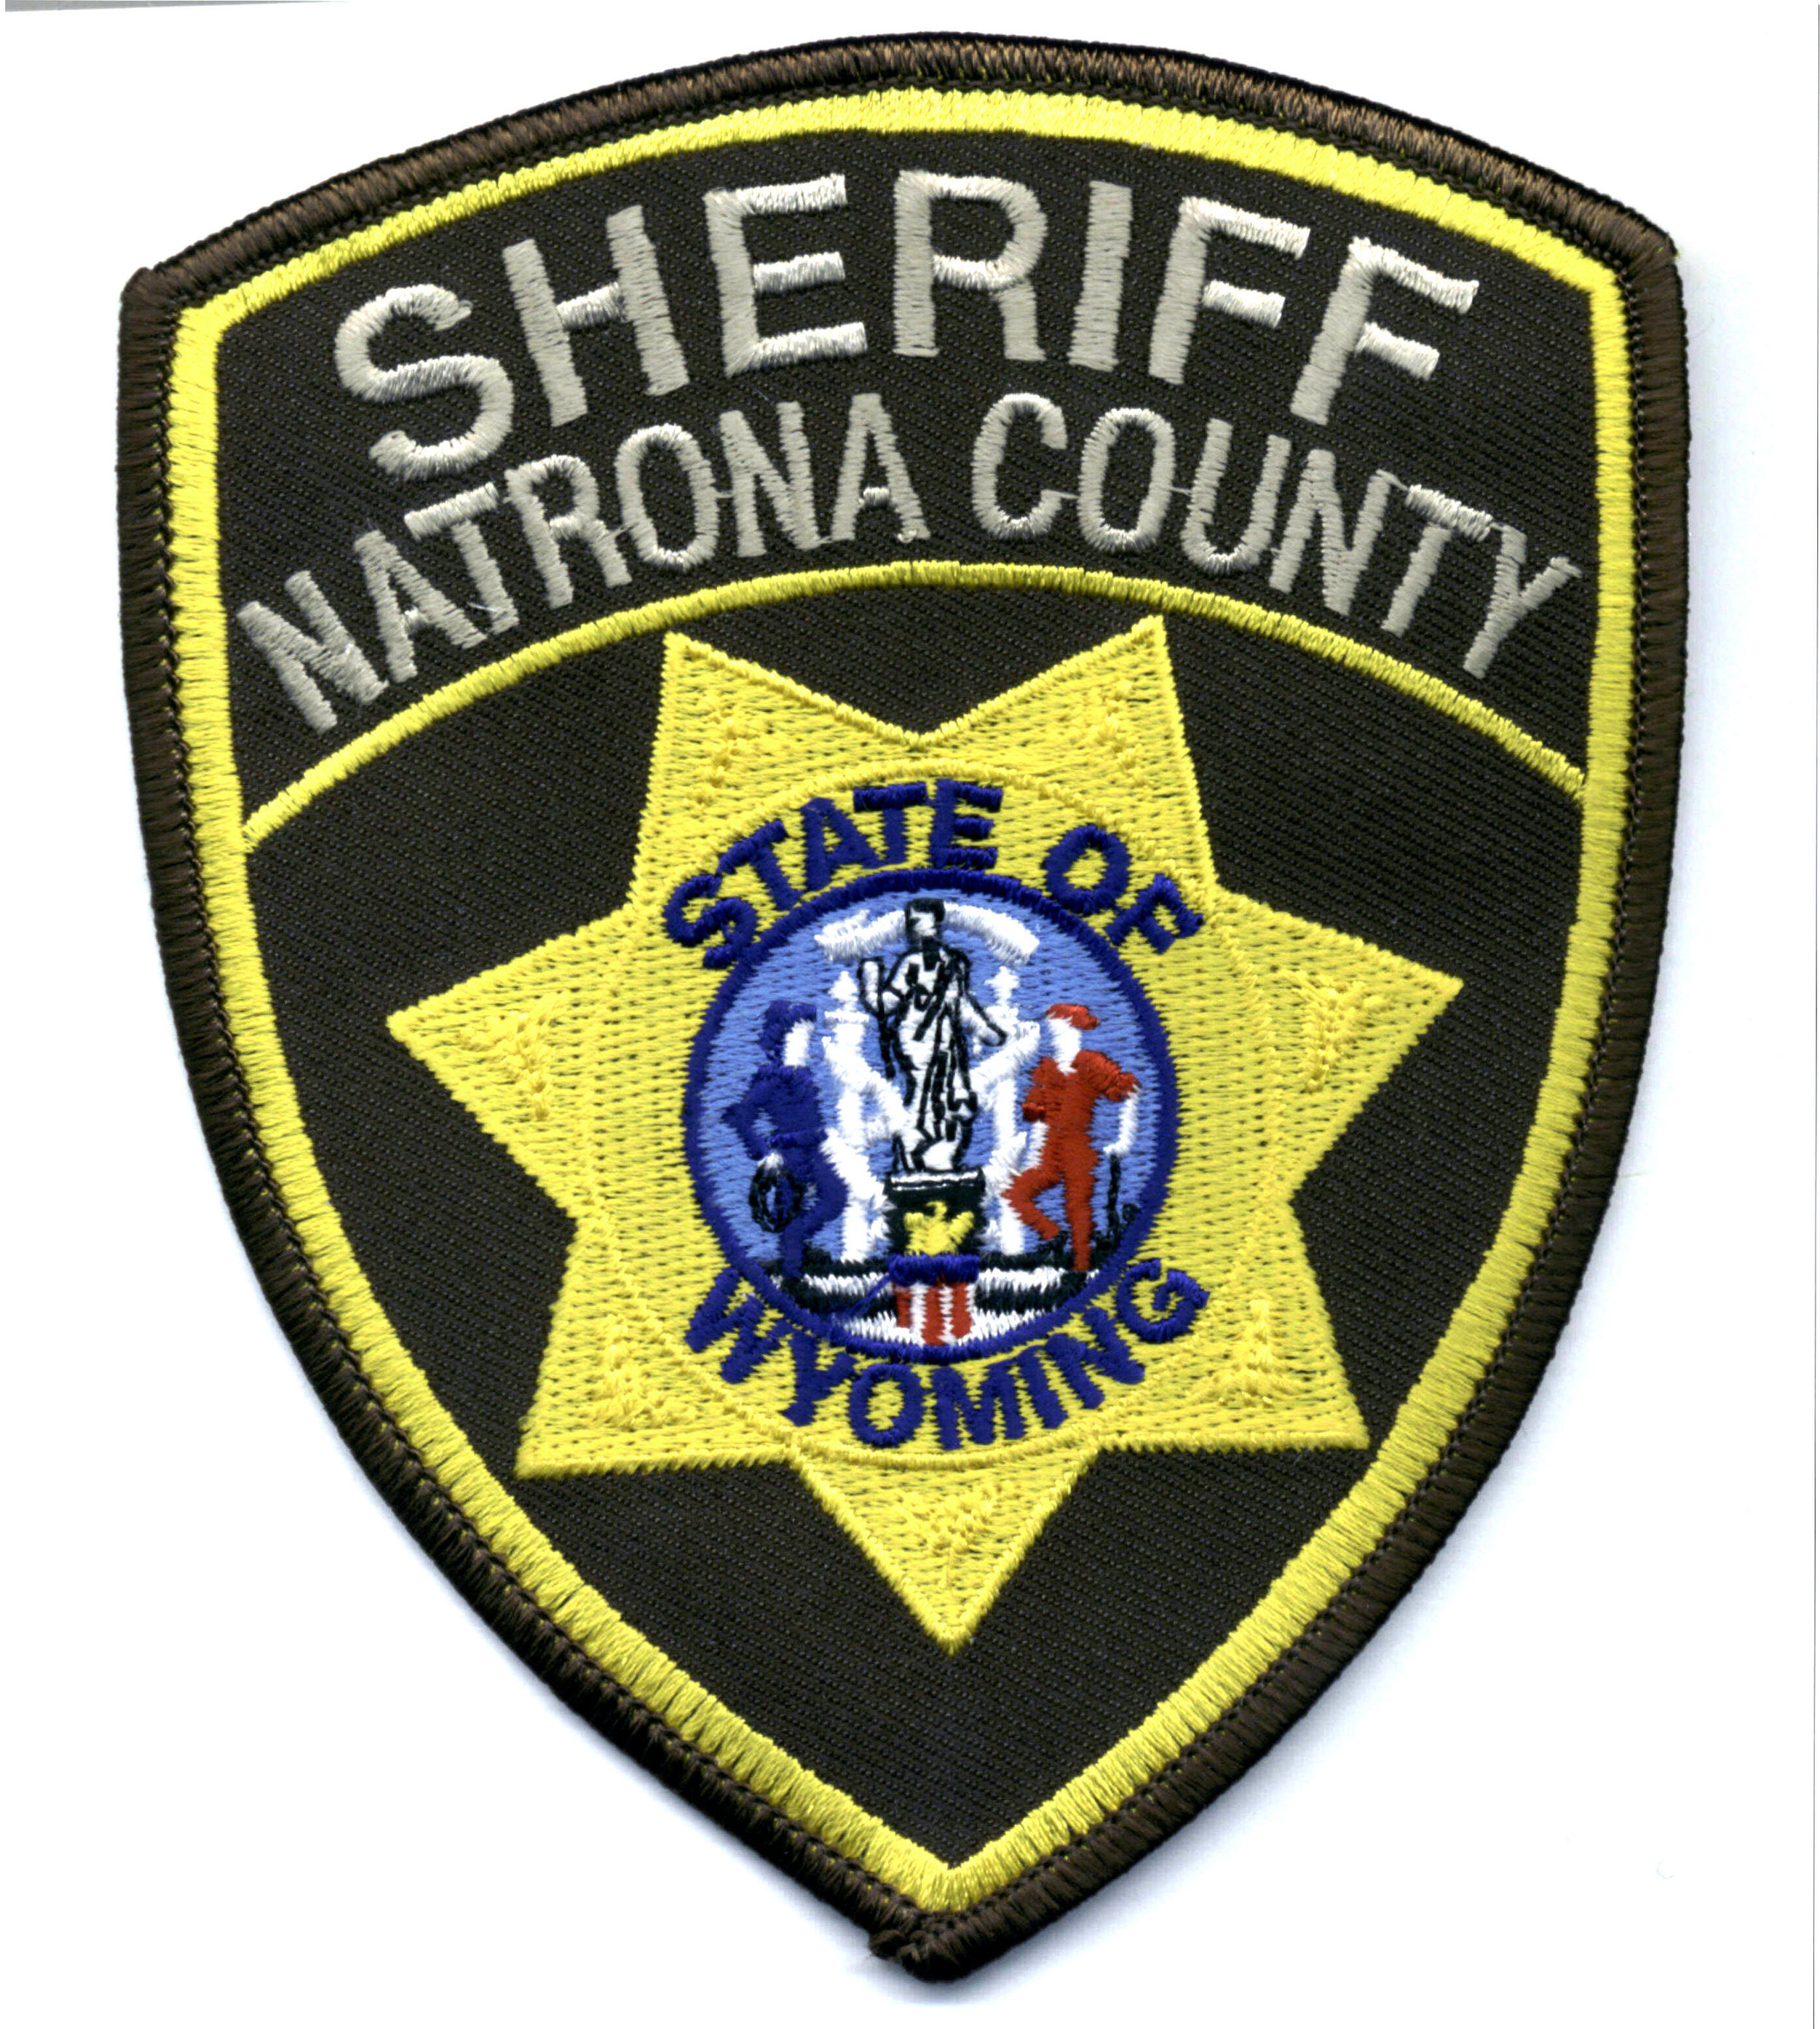 Natrona County Sheriff’s Office201 N. David St., 2nd Floor Casper, WY 82601Natrona County Sheriff’s Office